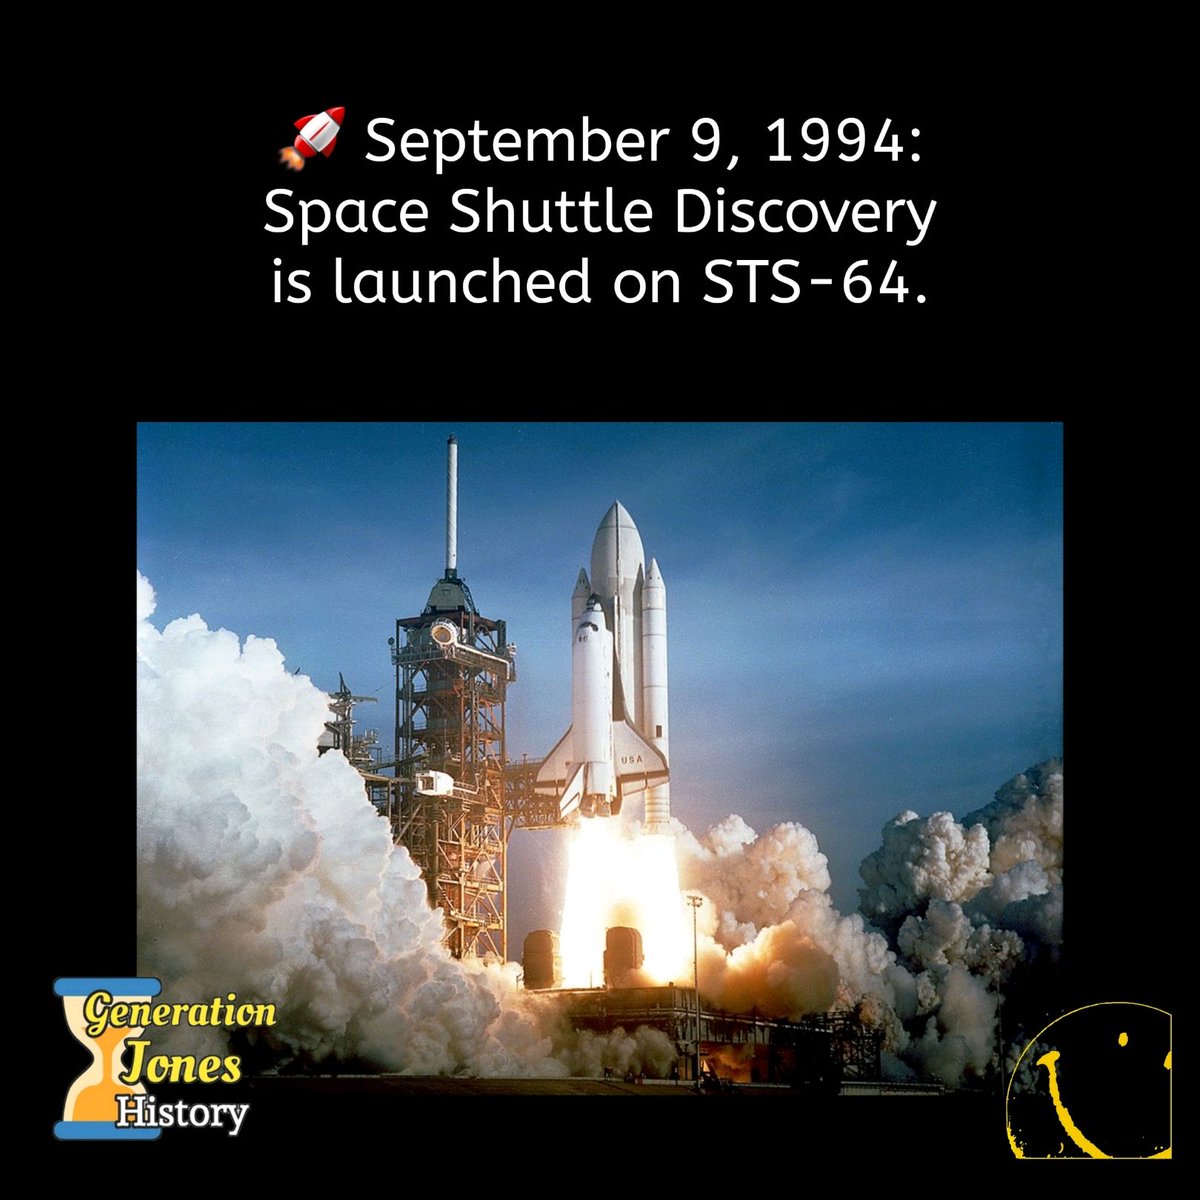 🚀 September 9, 1994:
#nasa #spaceshuttle #spaceshuttlediscovery #history #ushistory #1990s 
#technology
#generationjones #generationx #babyboom